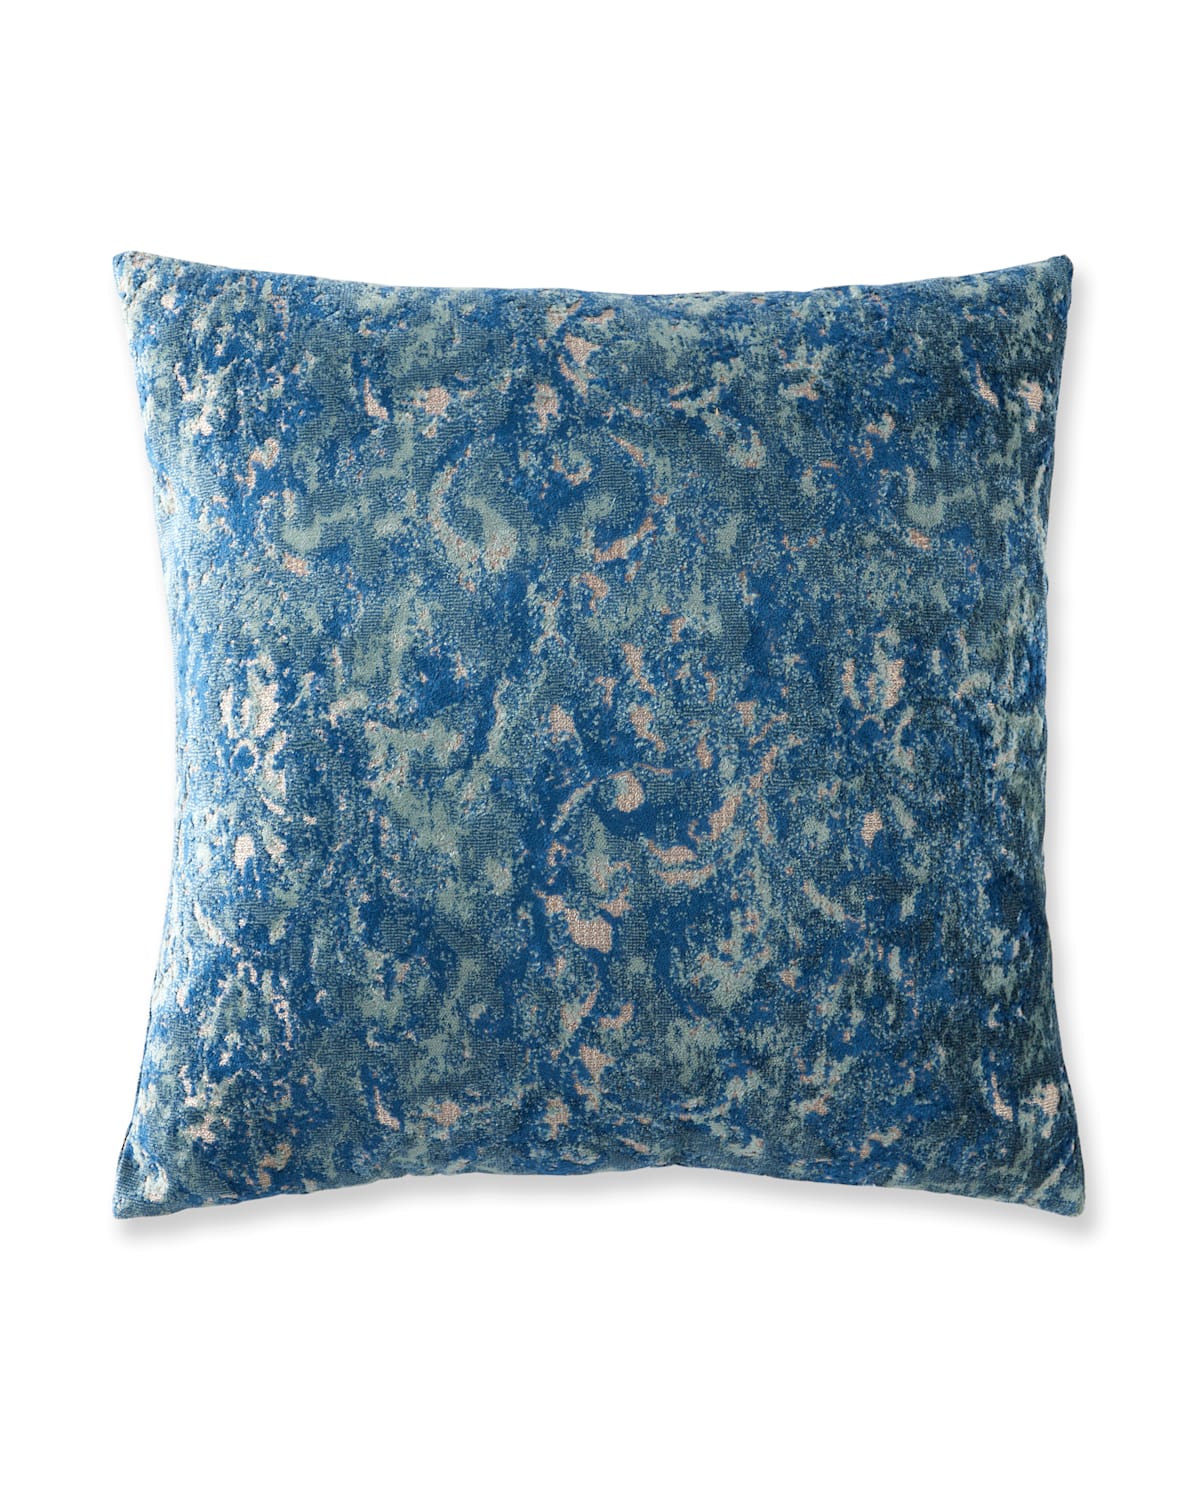 Shop Eastern Accents Byzantine Velvet Decorative Pillow, Slate